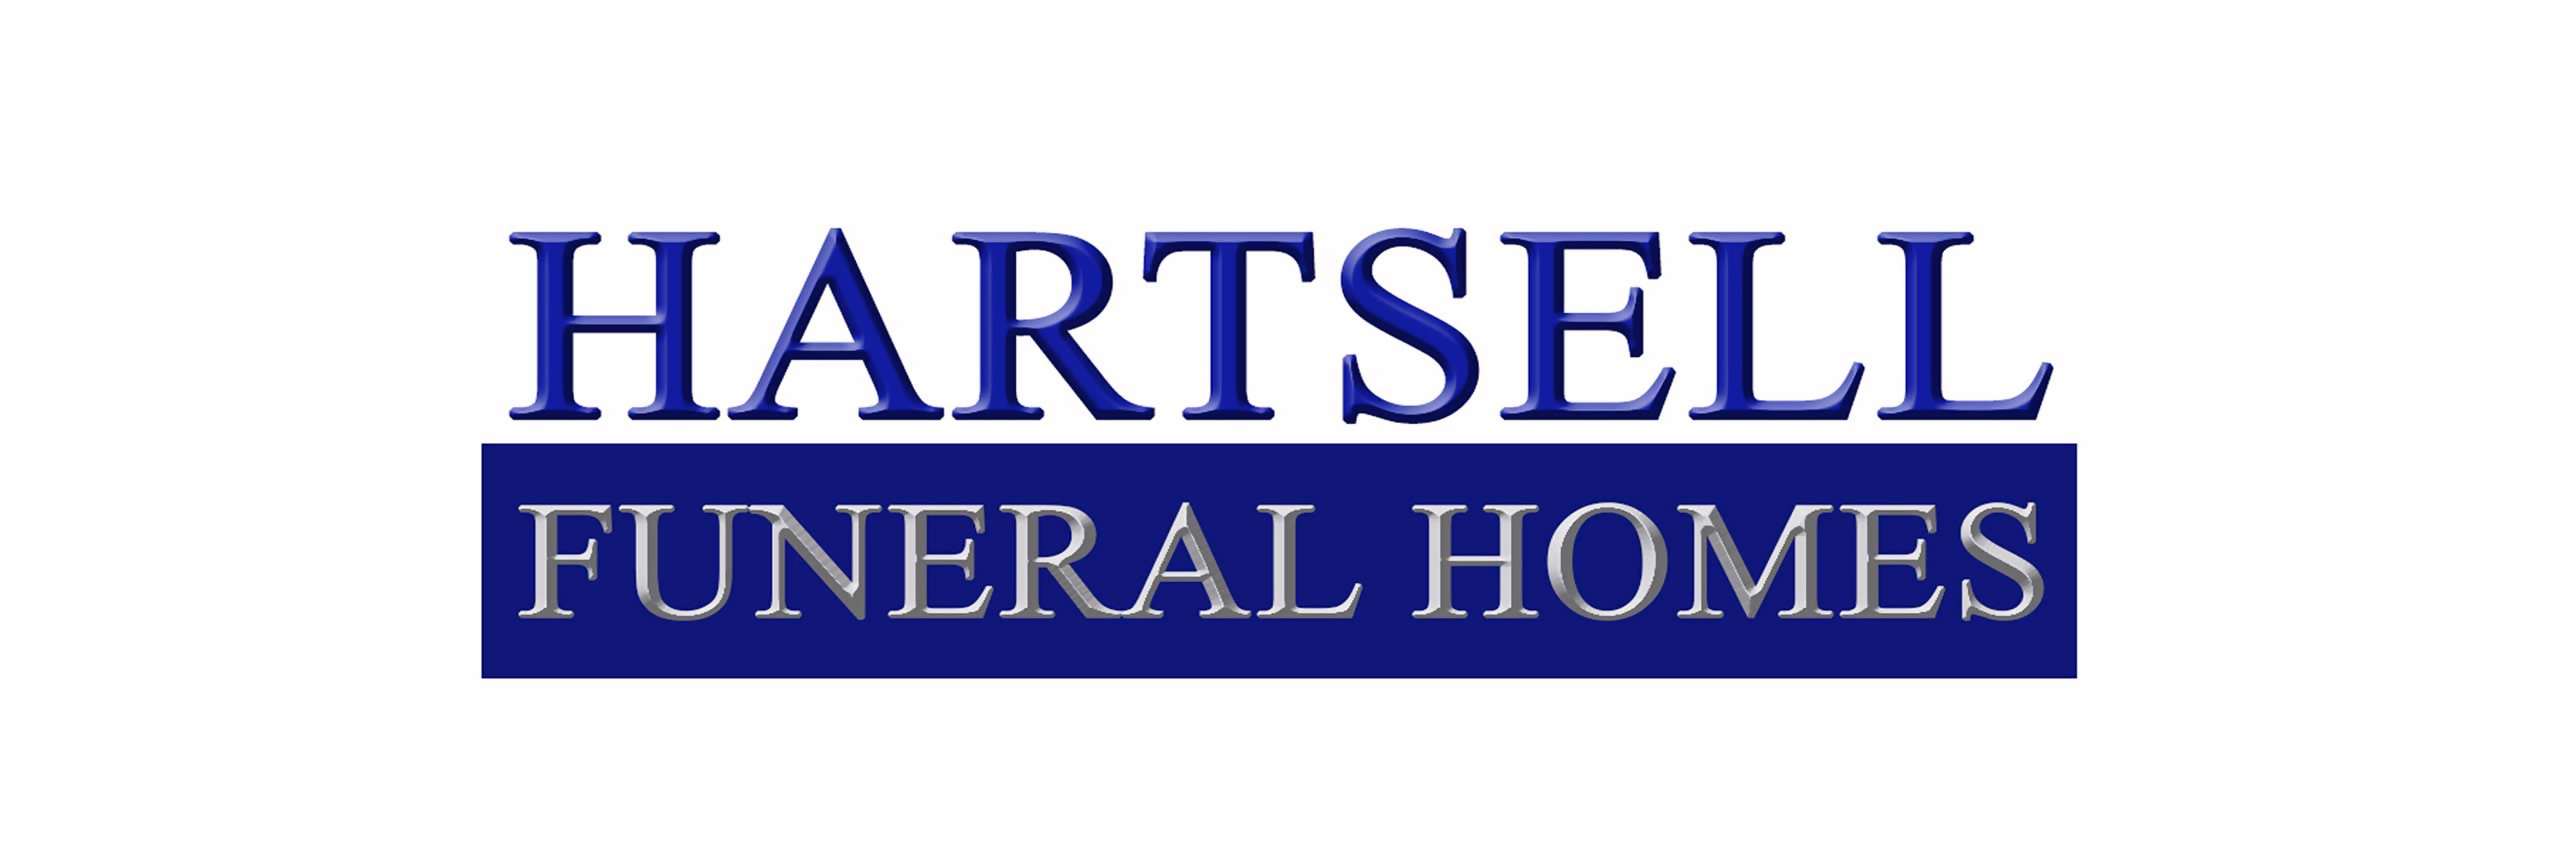 Hartsell Funeral Home Midland NC